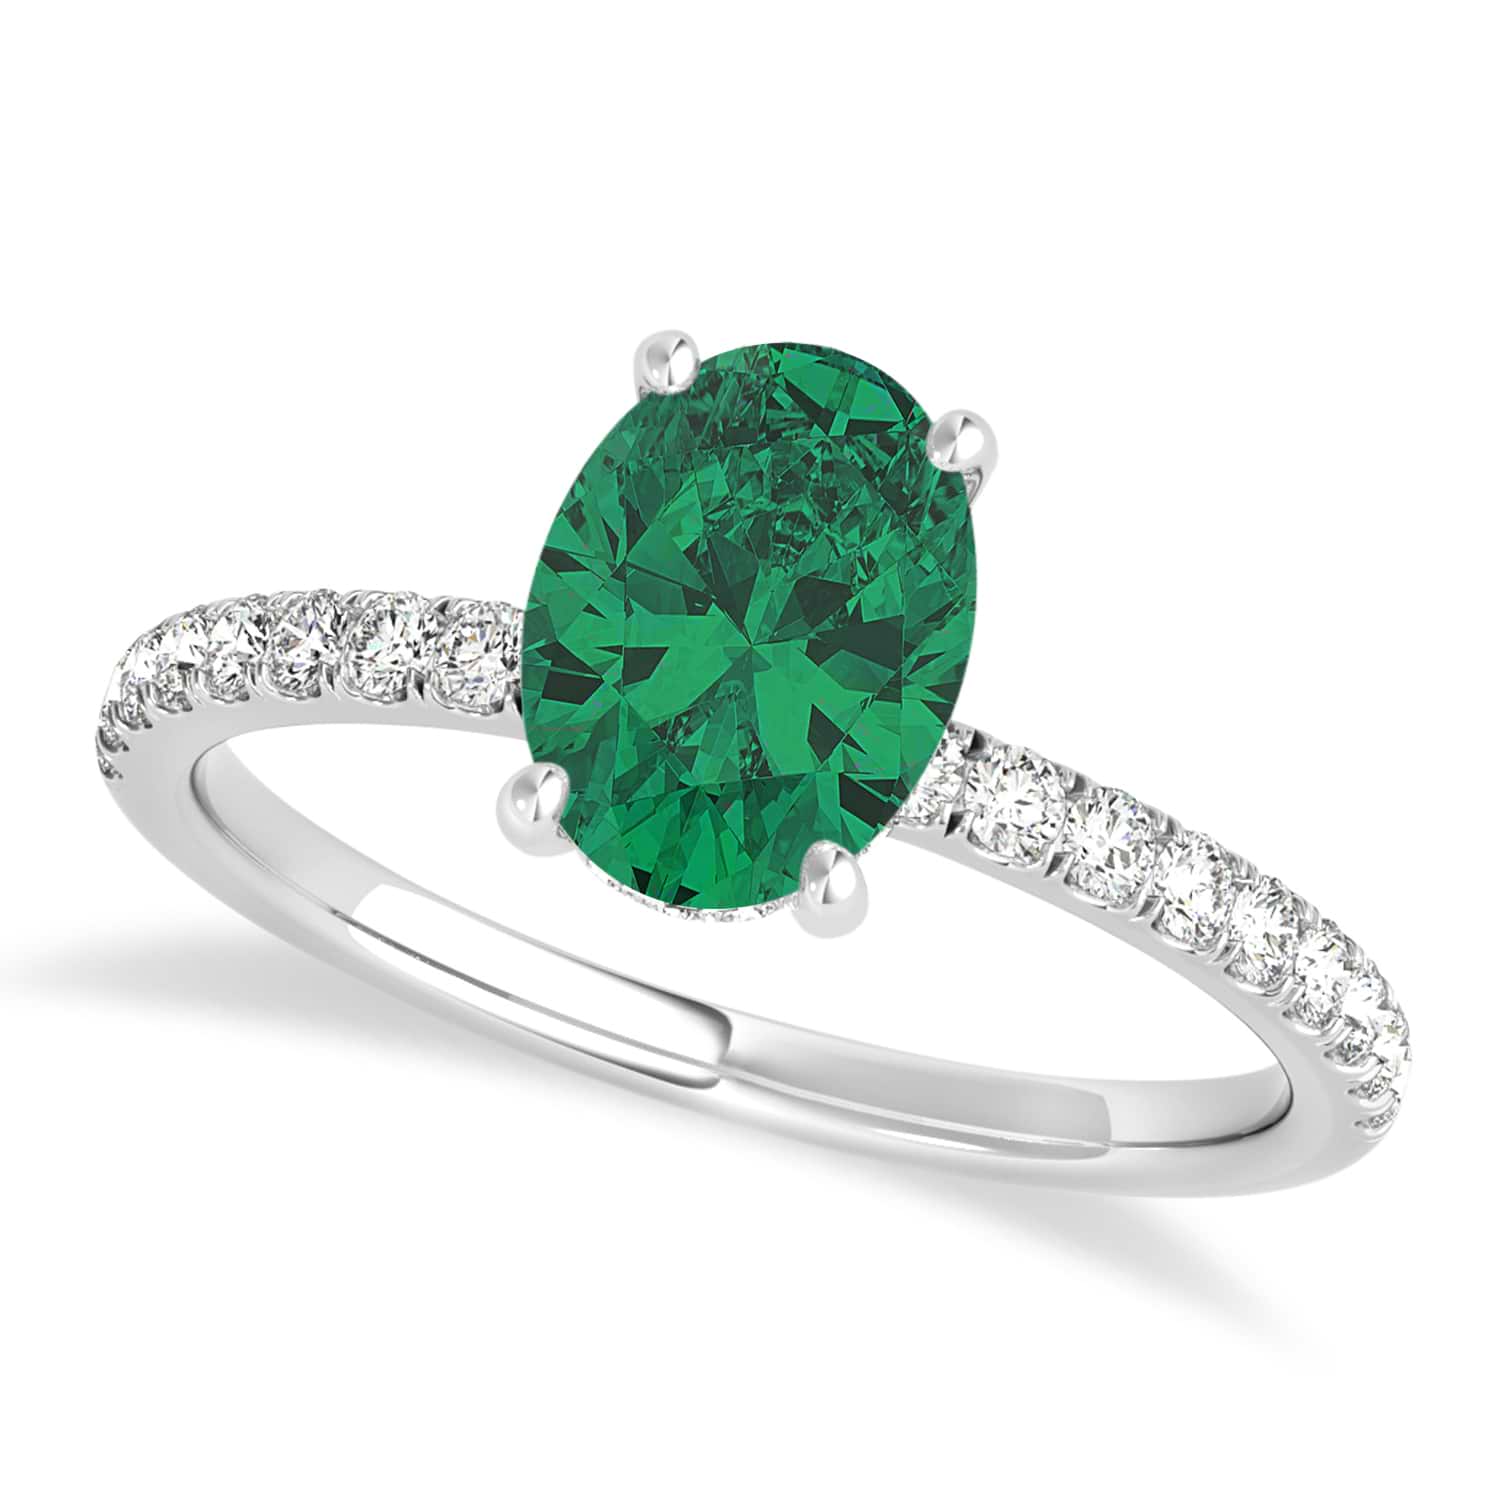 Oval Emerald & Diamond Single Row Hidden Halo Engagement Ring 18k White Gold (0.68ct)